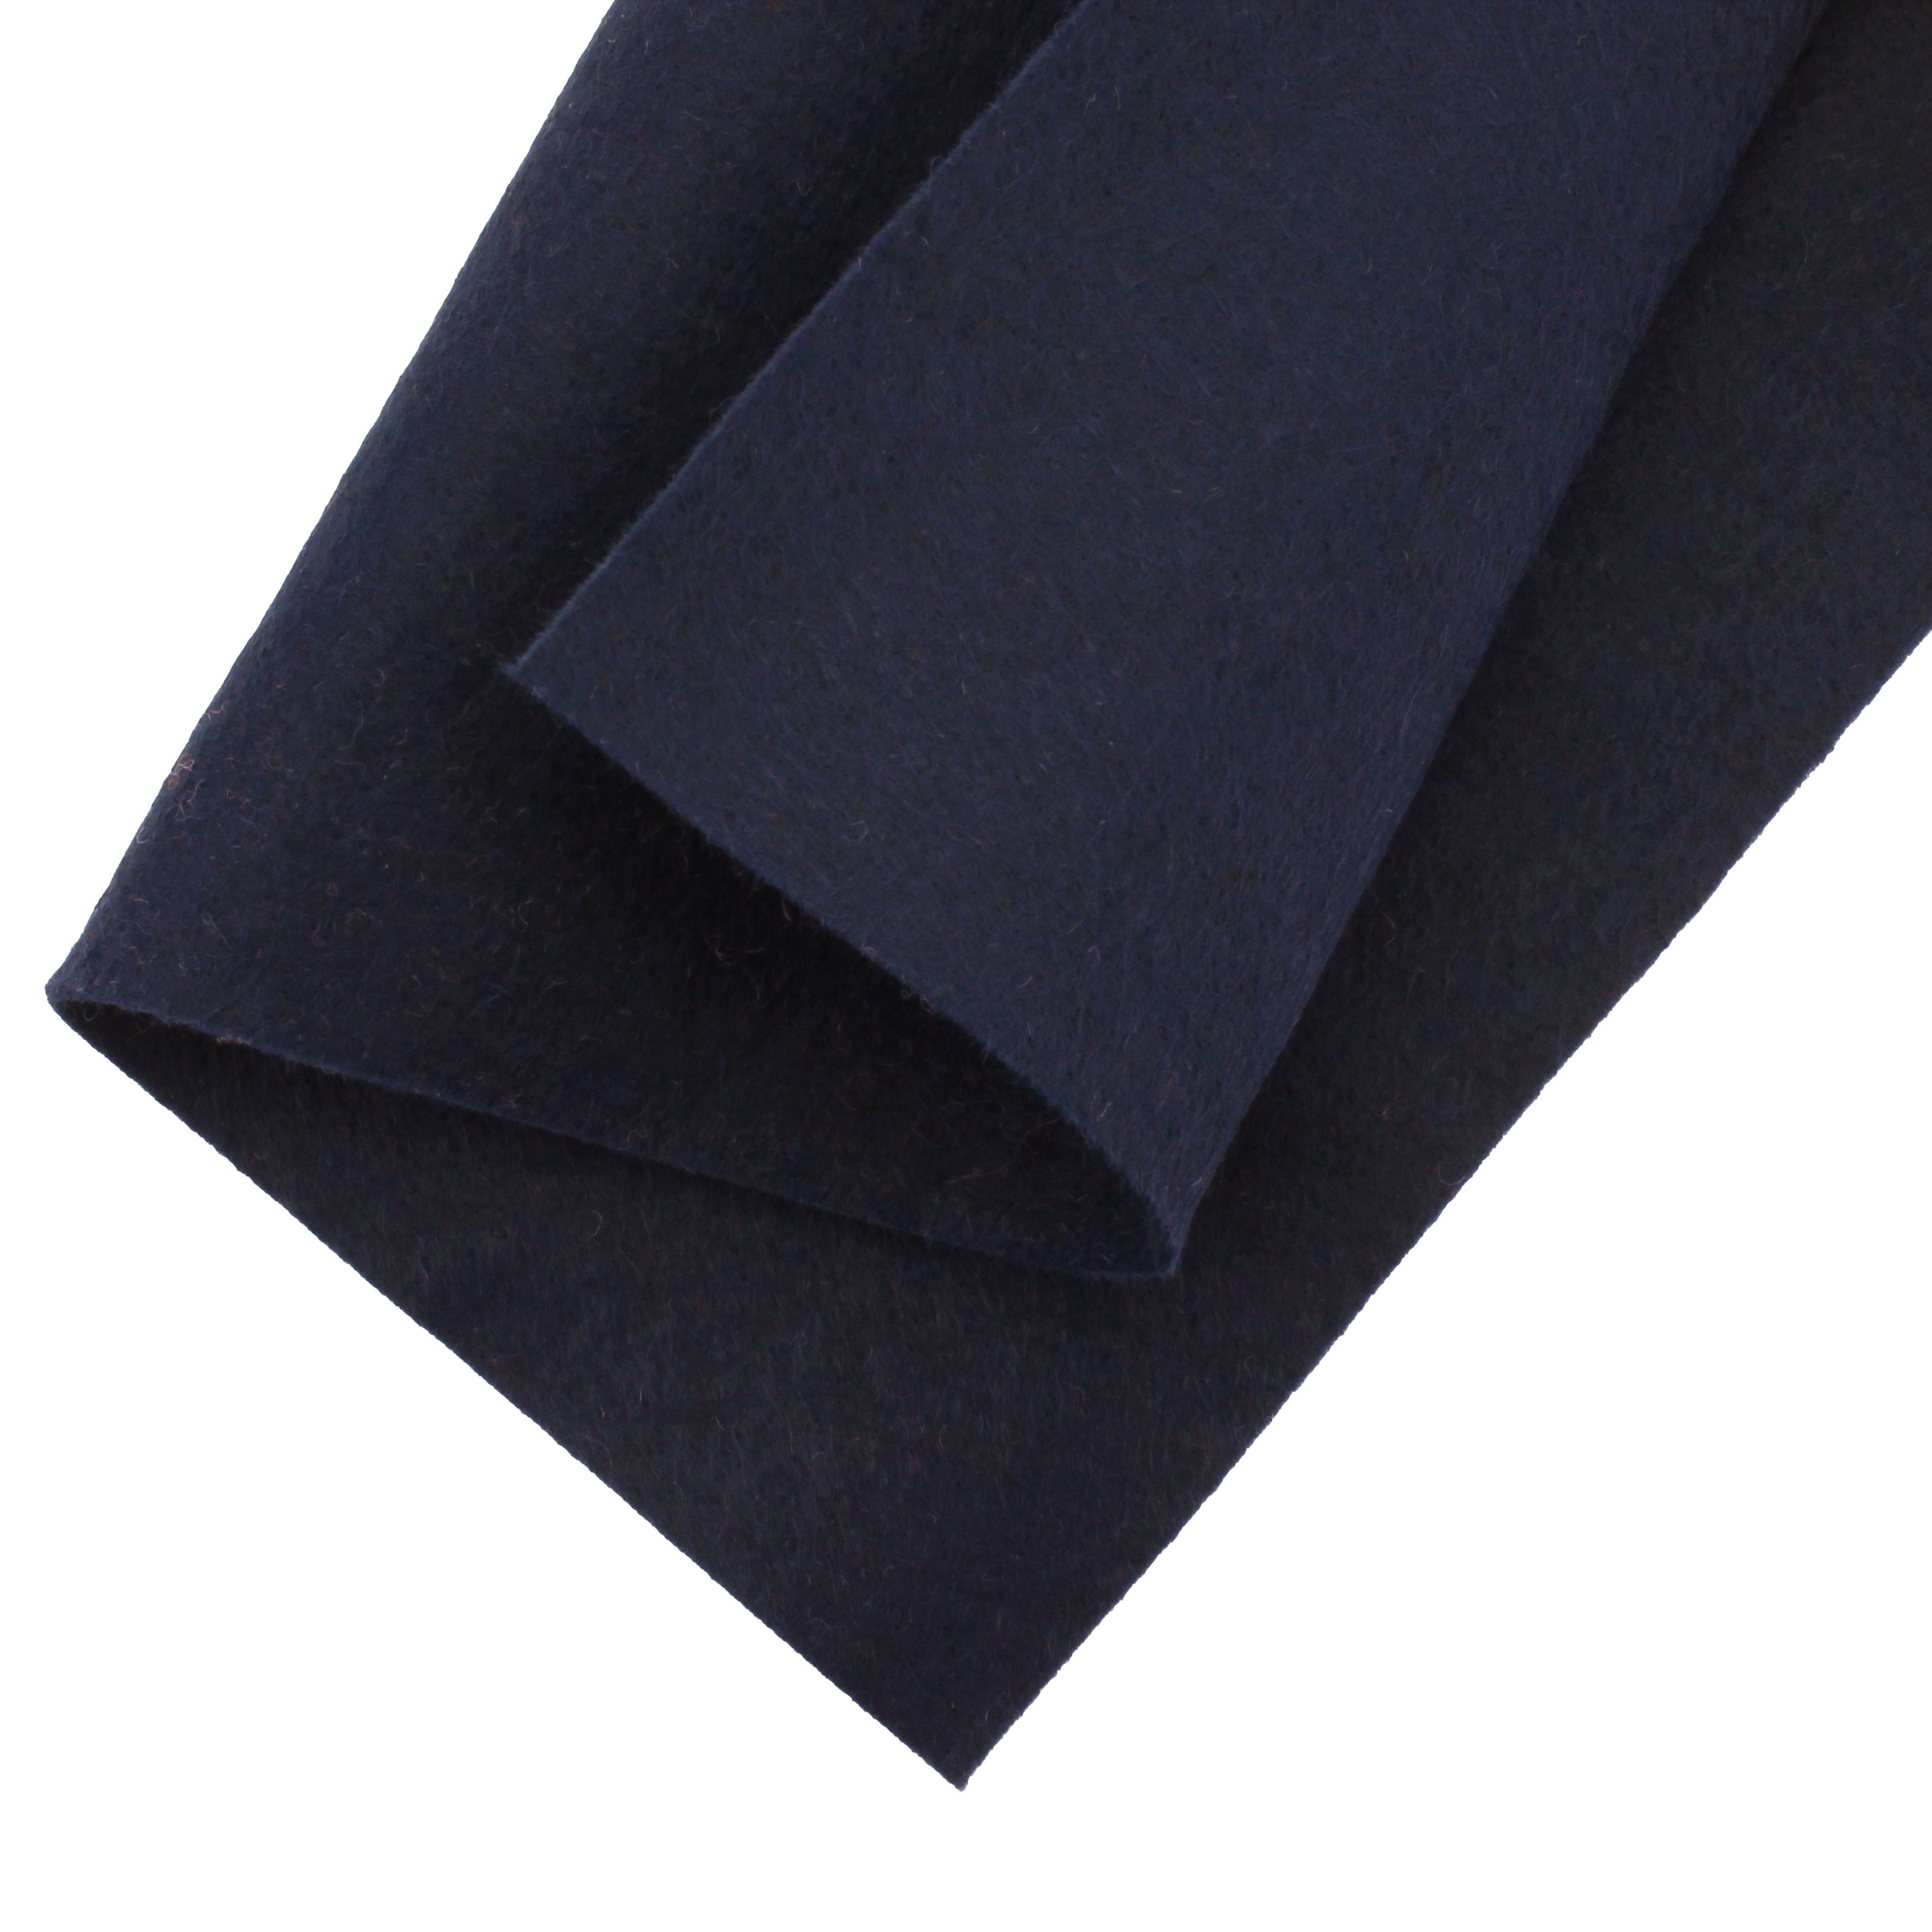 Light Blue 40% Merino Wool Blend Adhesive Felt Crafting Sheets Sz A4 